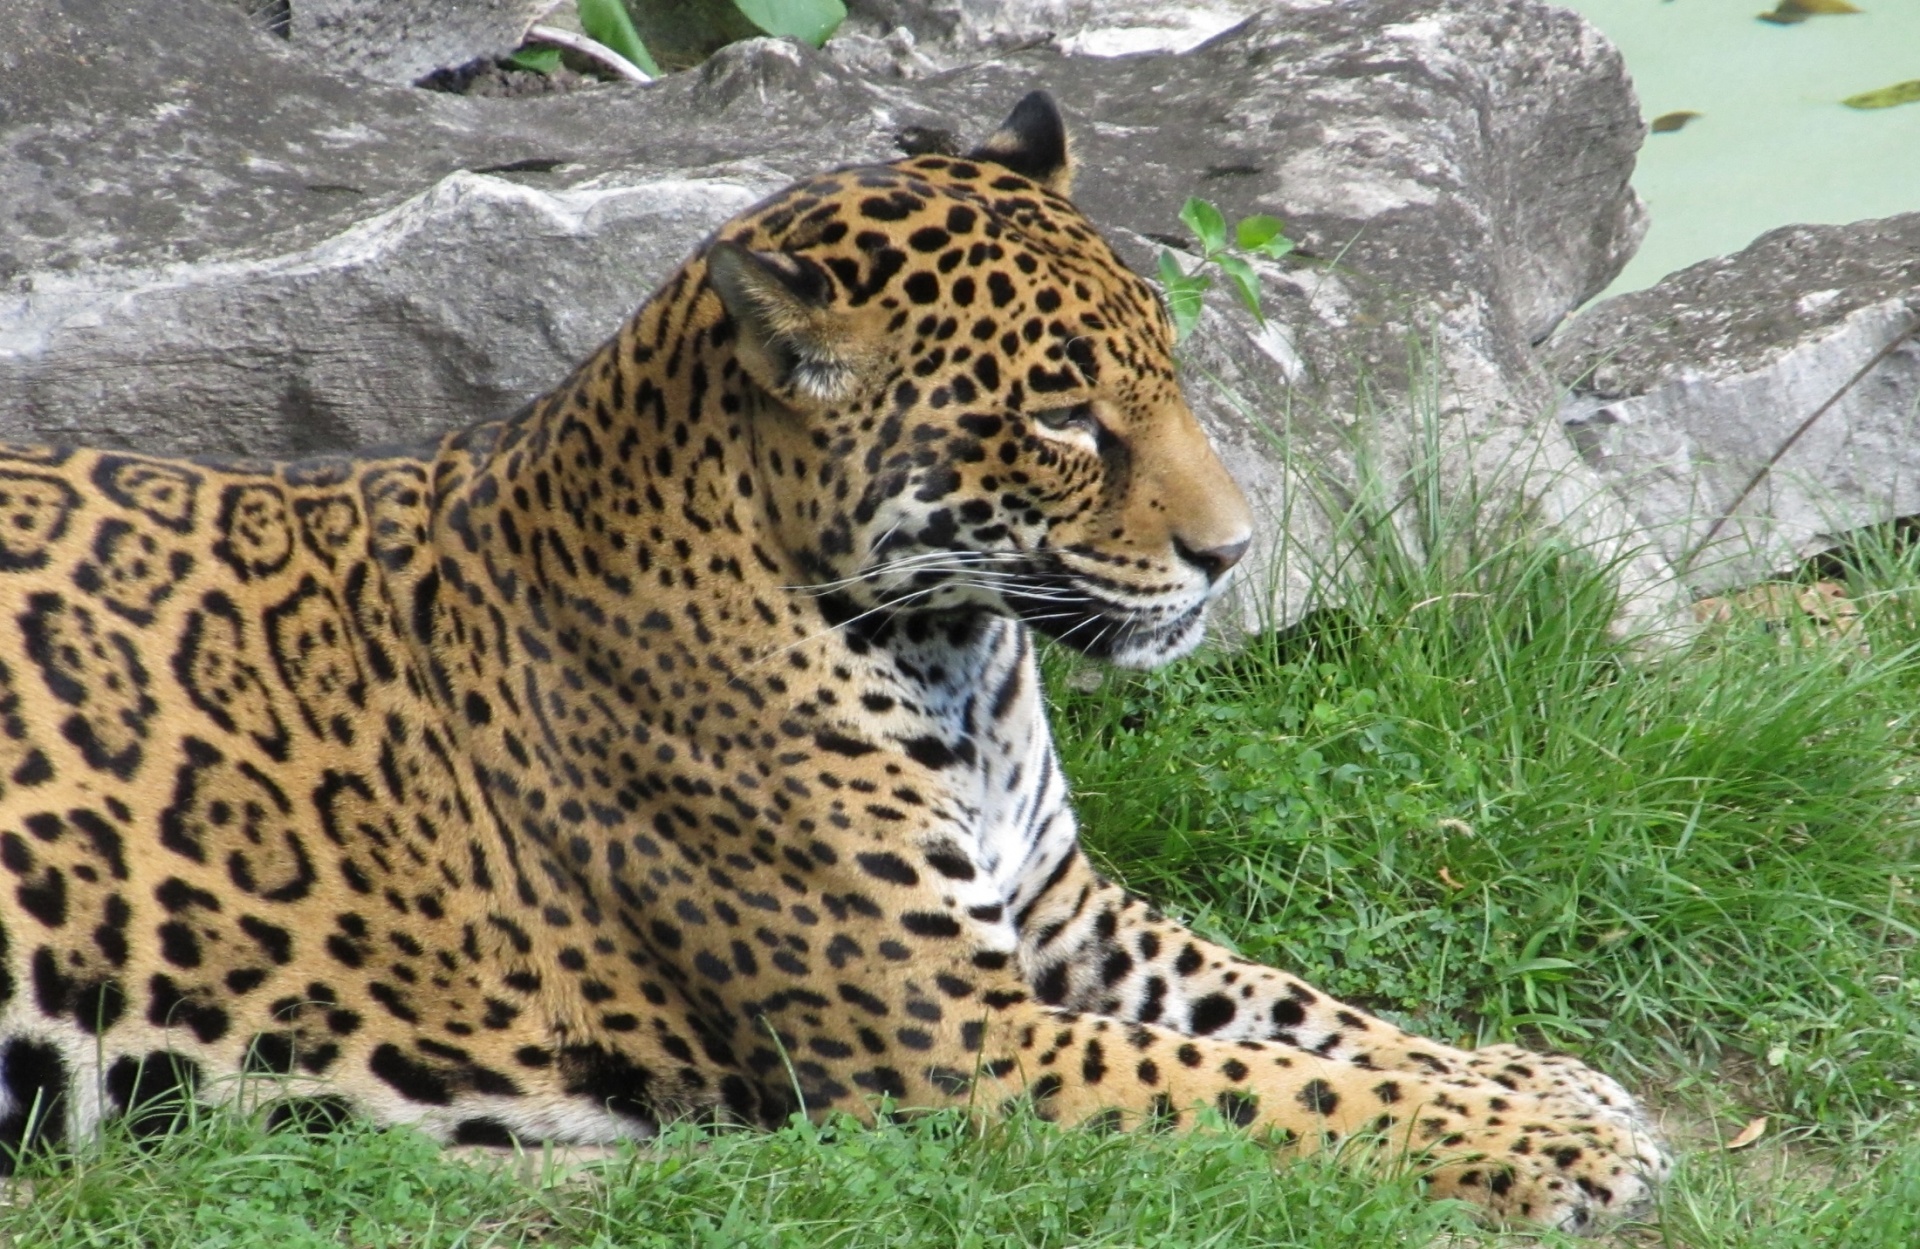 Close up view of a jaguar relaxing